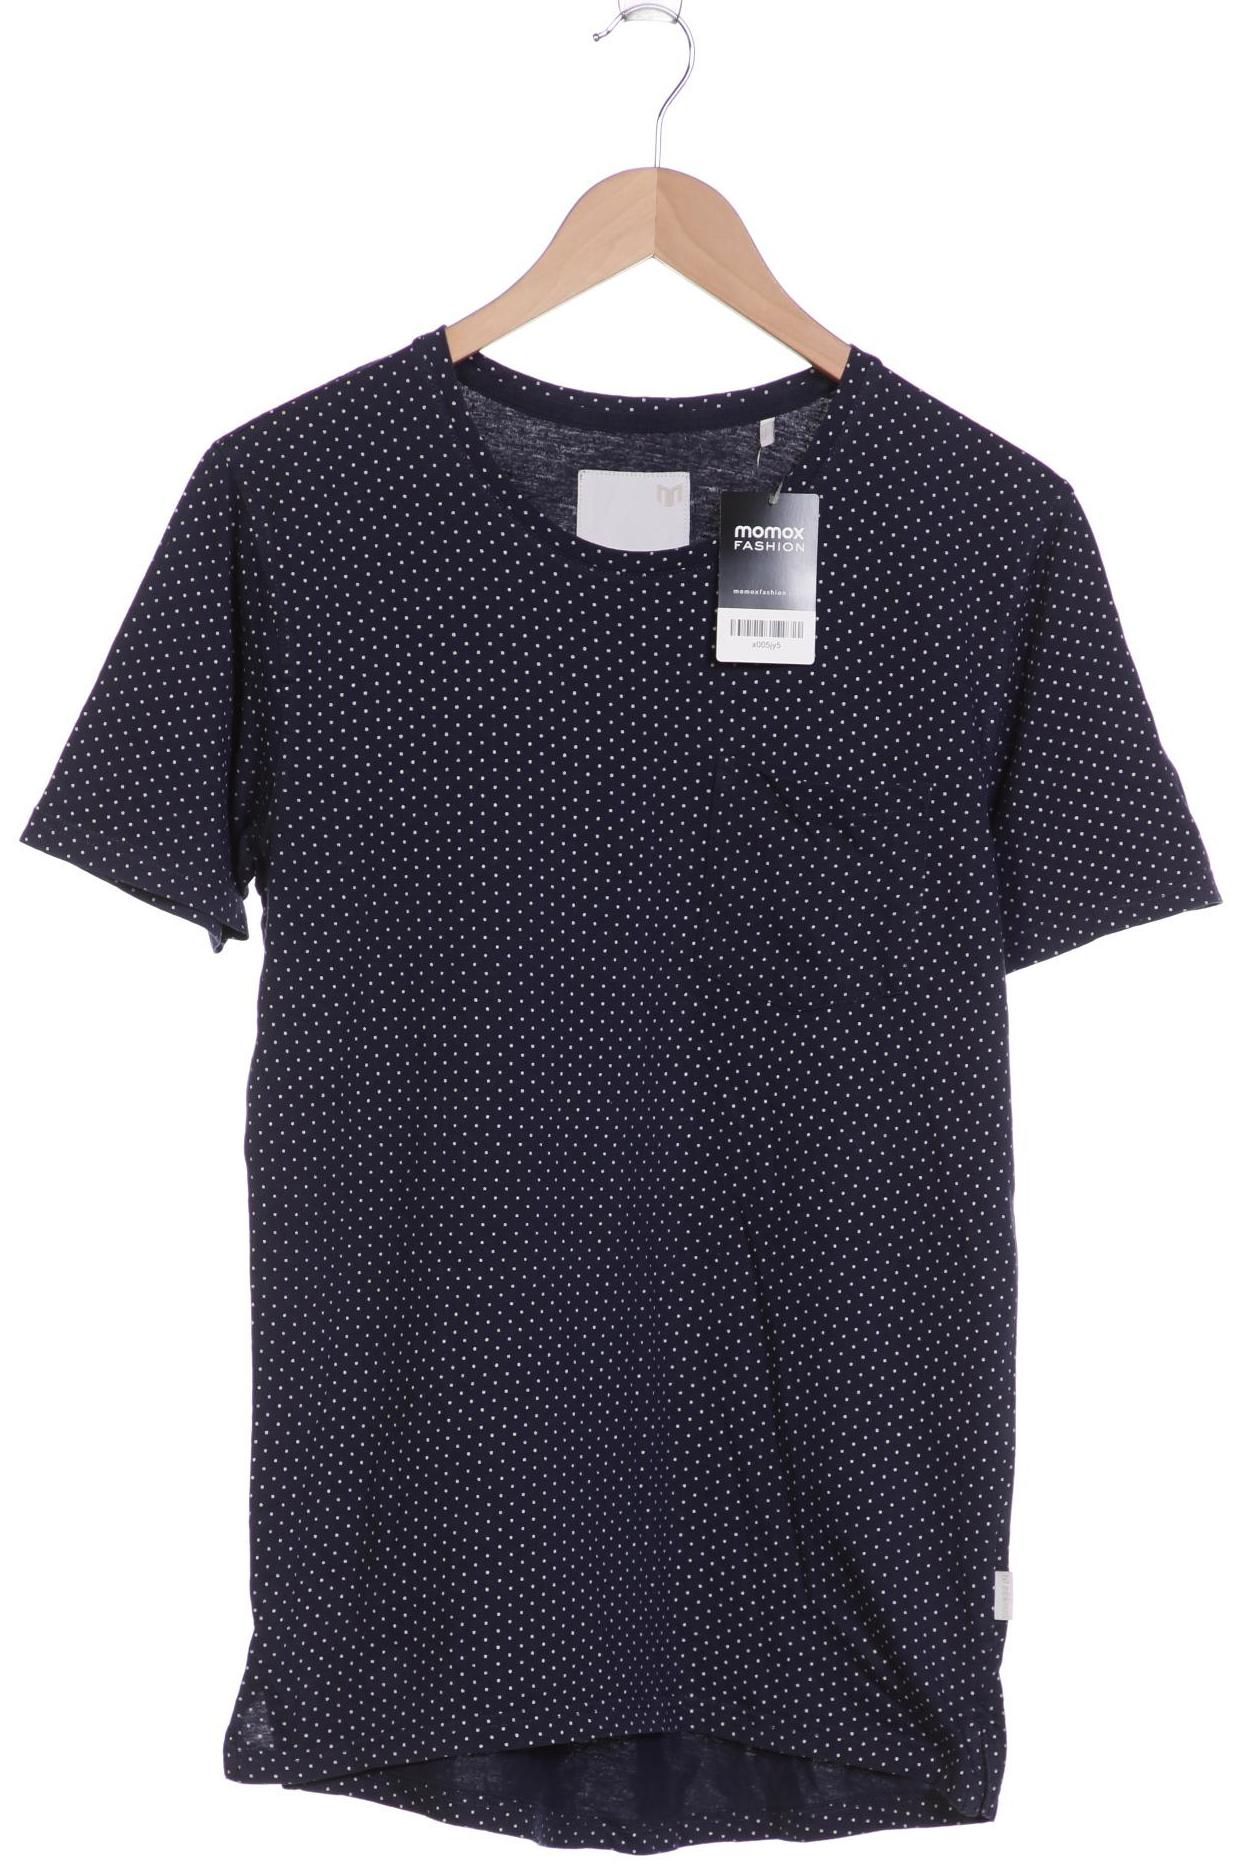 Minimum Herren T-Shirt, marineblau, Gr. 46 von Minimum